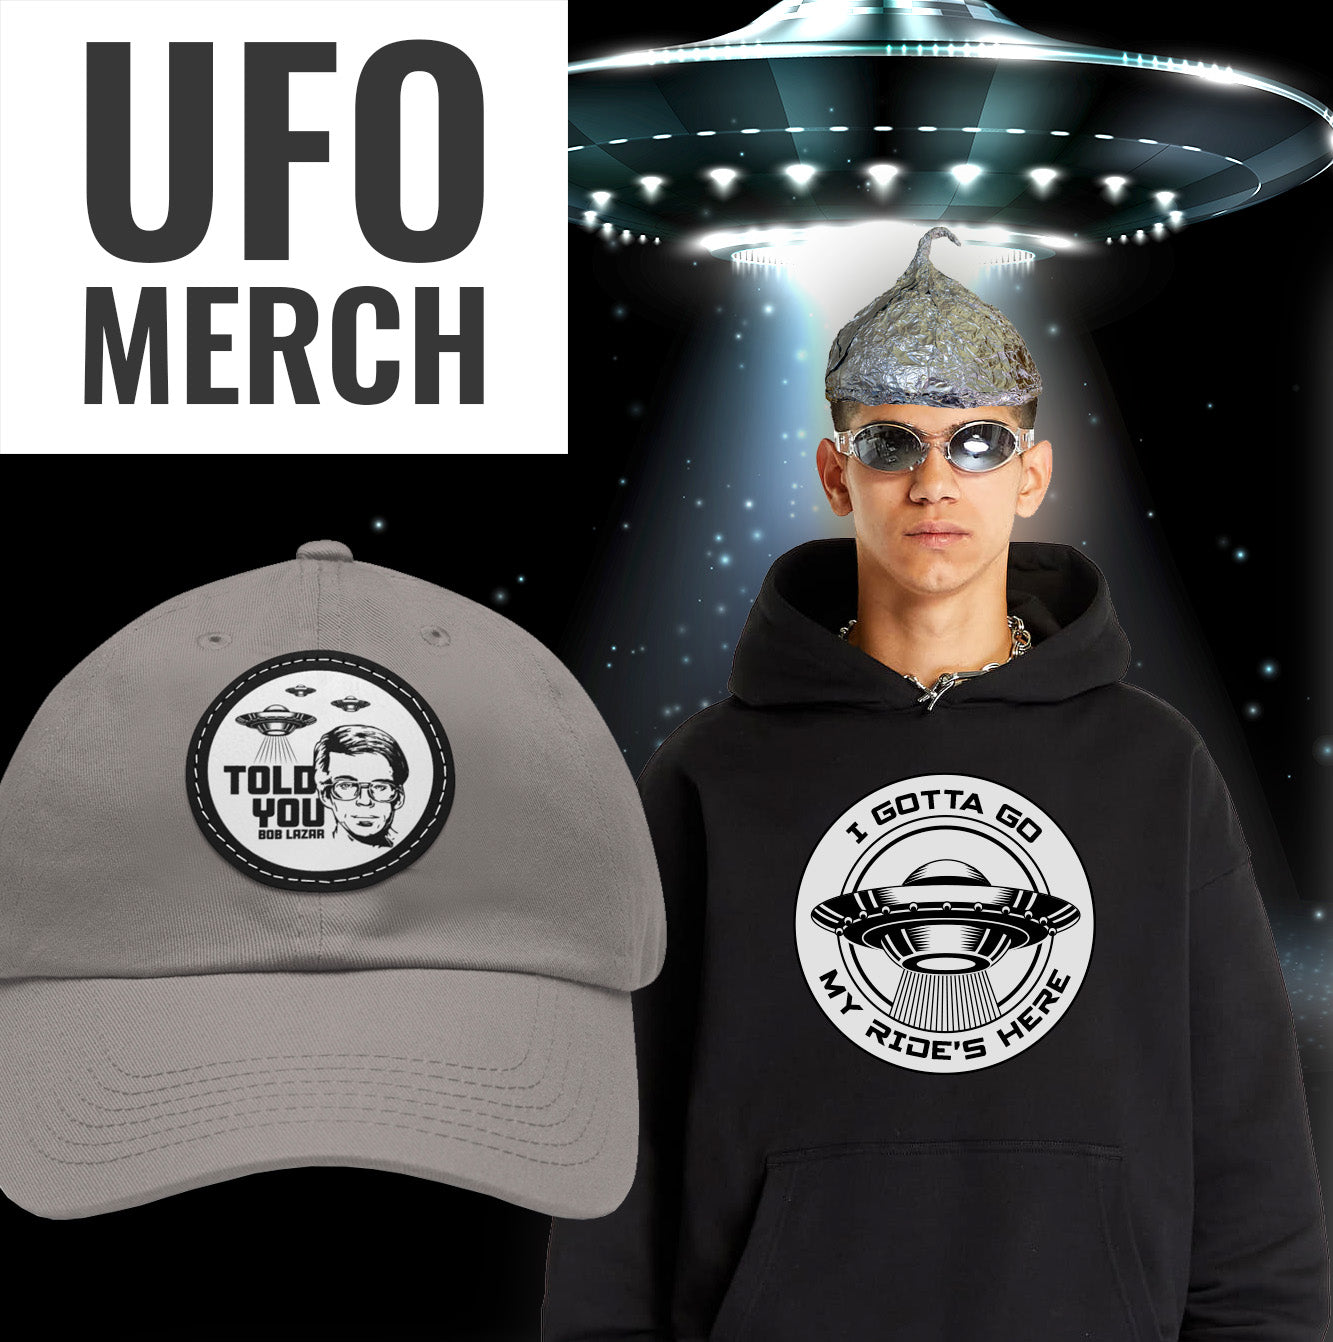 UFO Merch